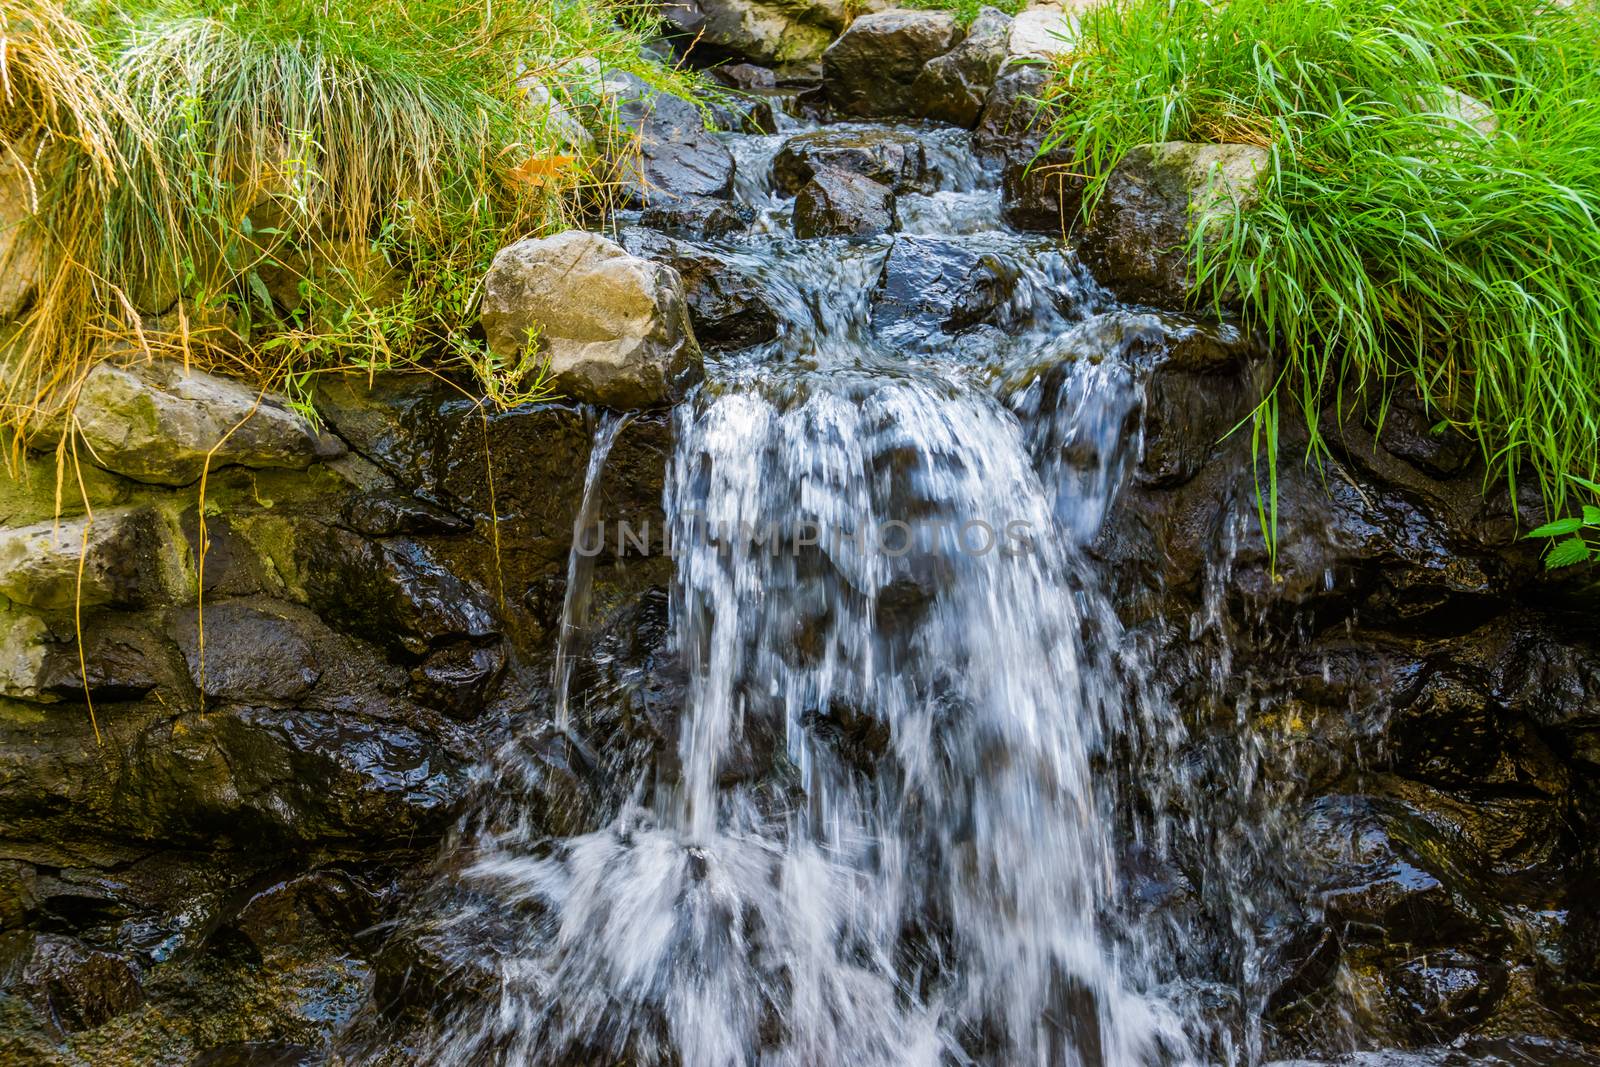 small streaming waterfall, water flowing over rocks, beautiful nature background by charlottebleijenberg